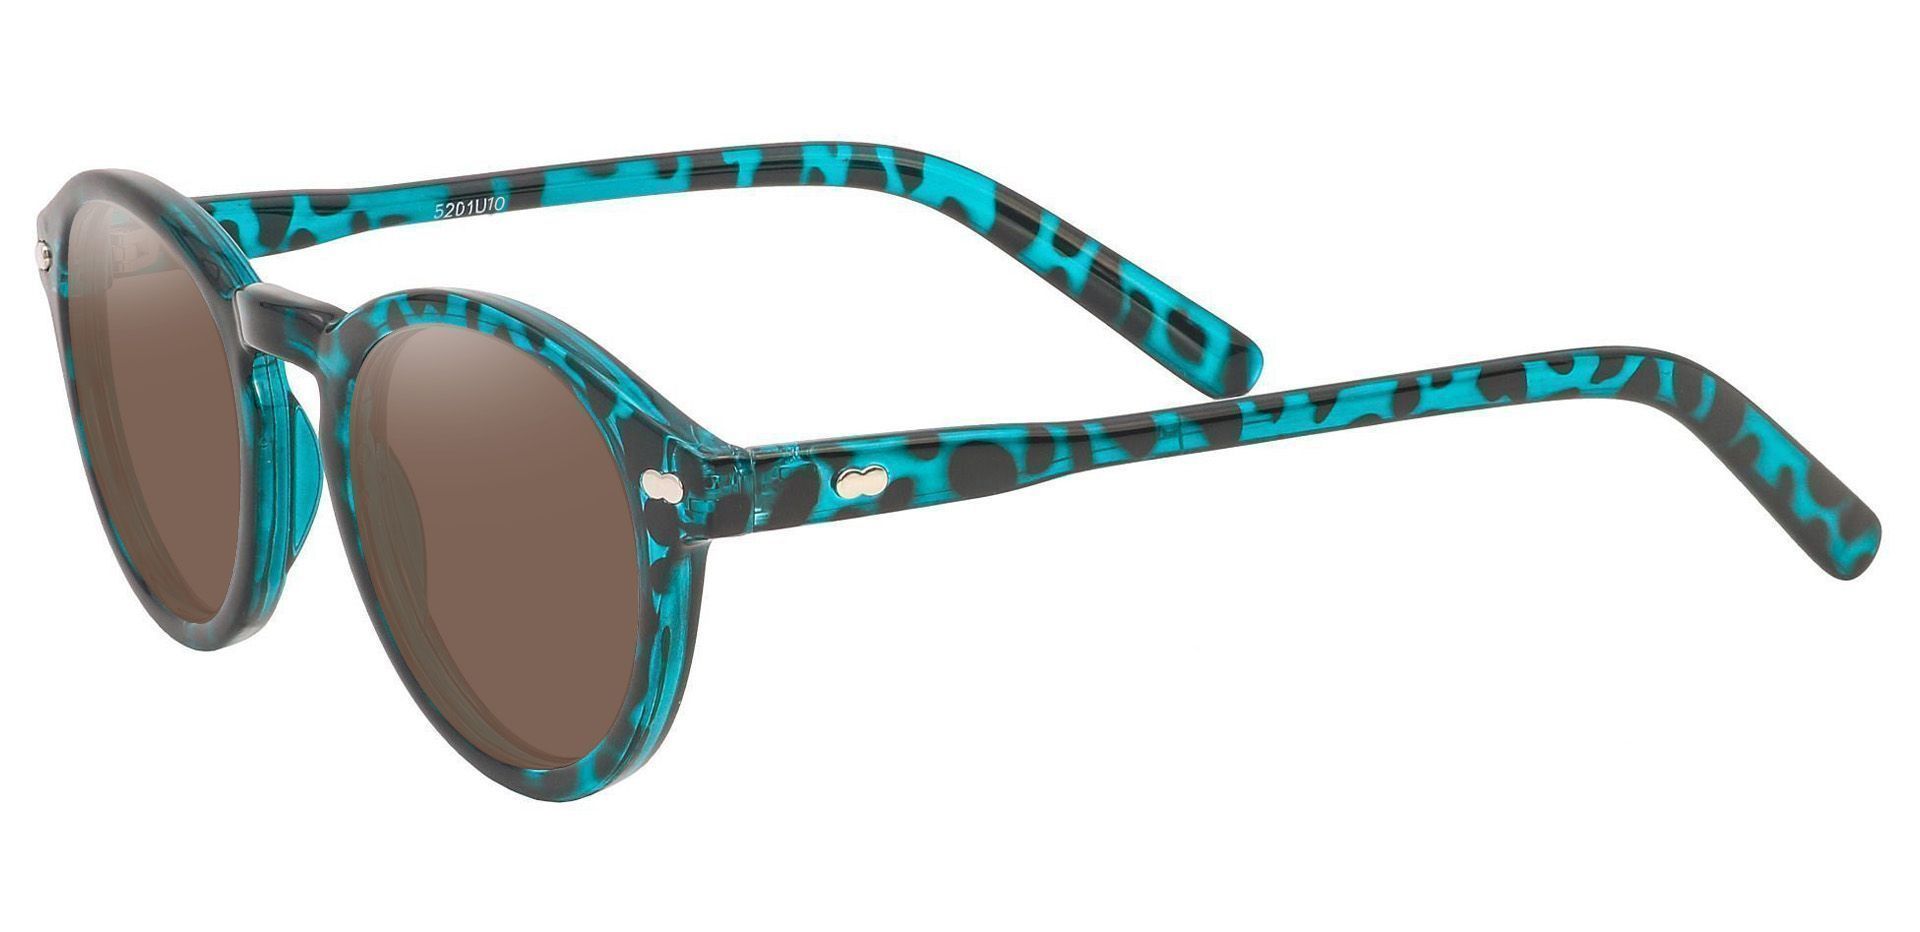 Vee Round Prescription Sunglasses - Blue Frame With Brown Lenses